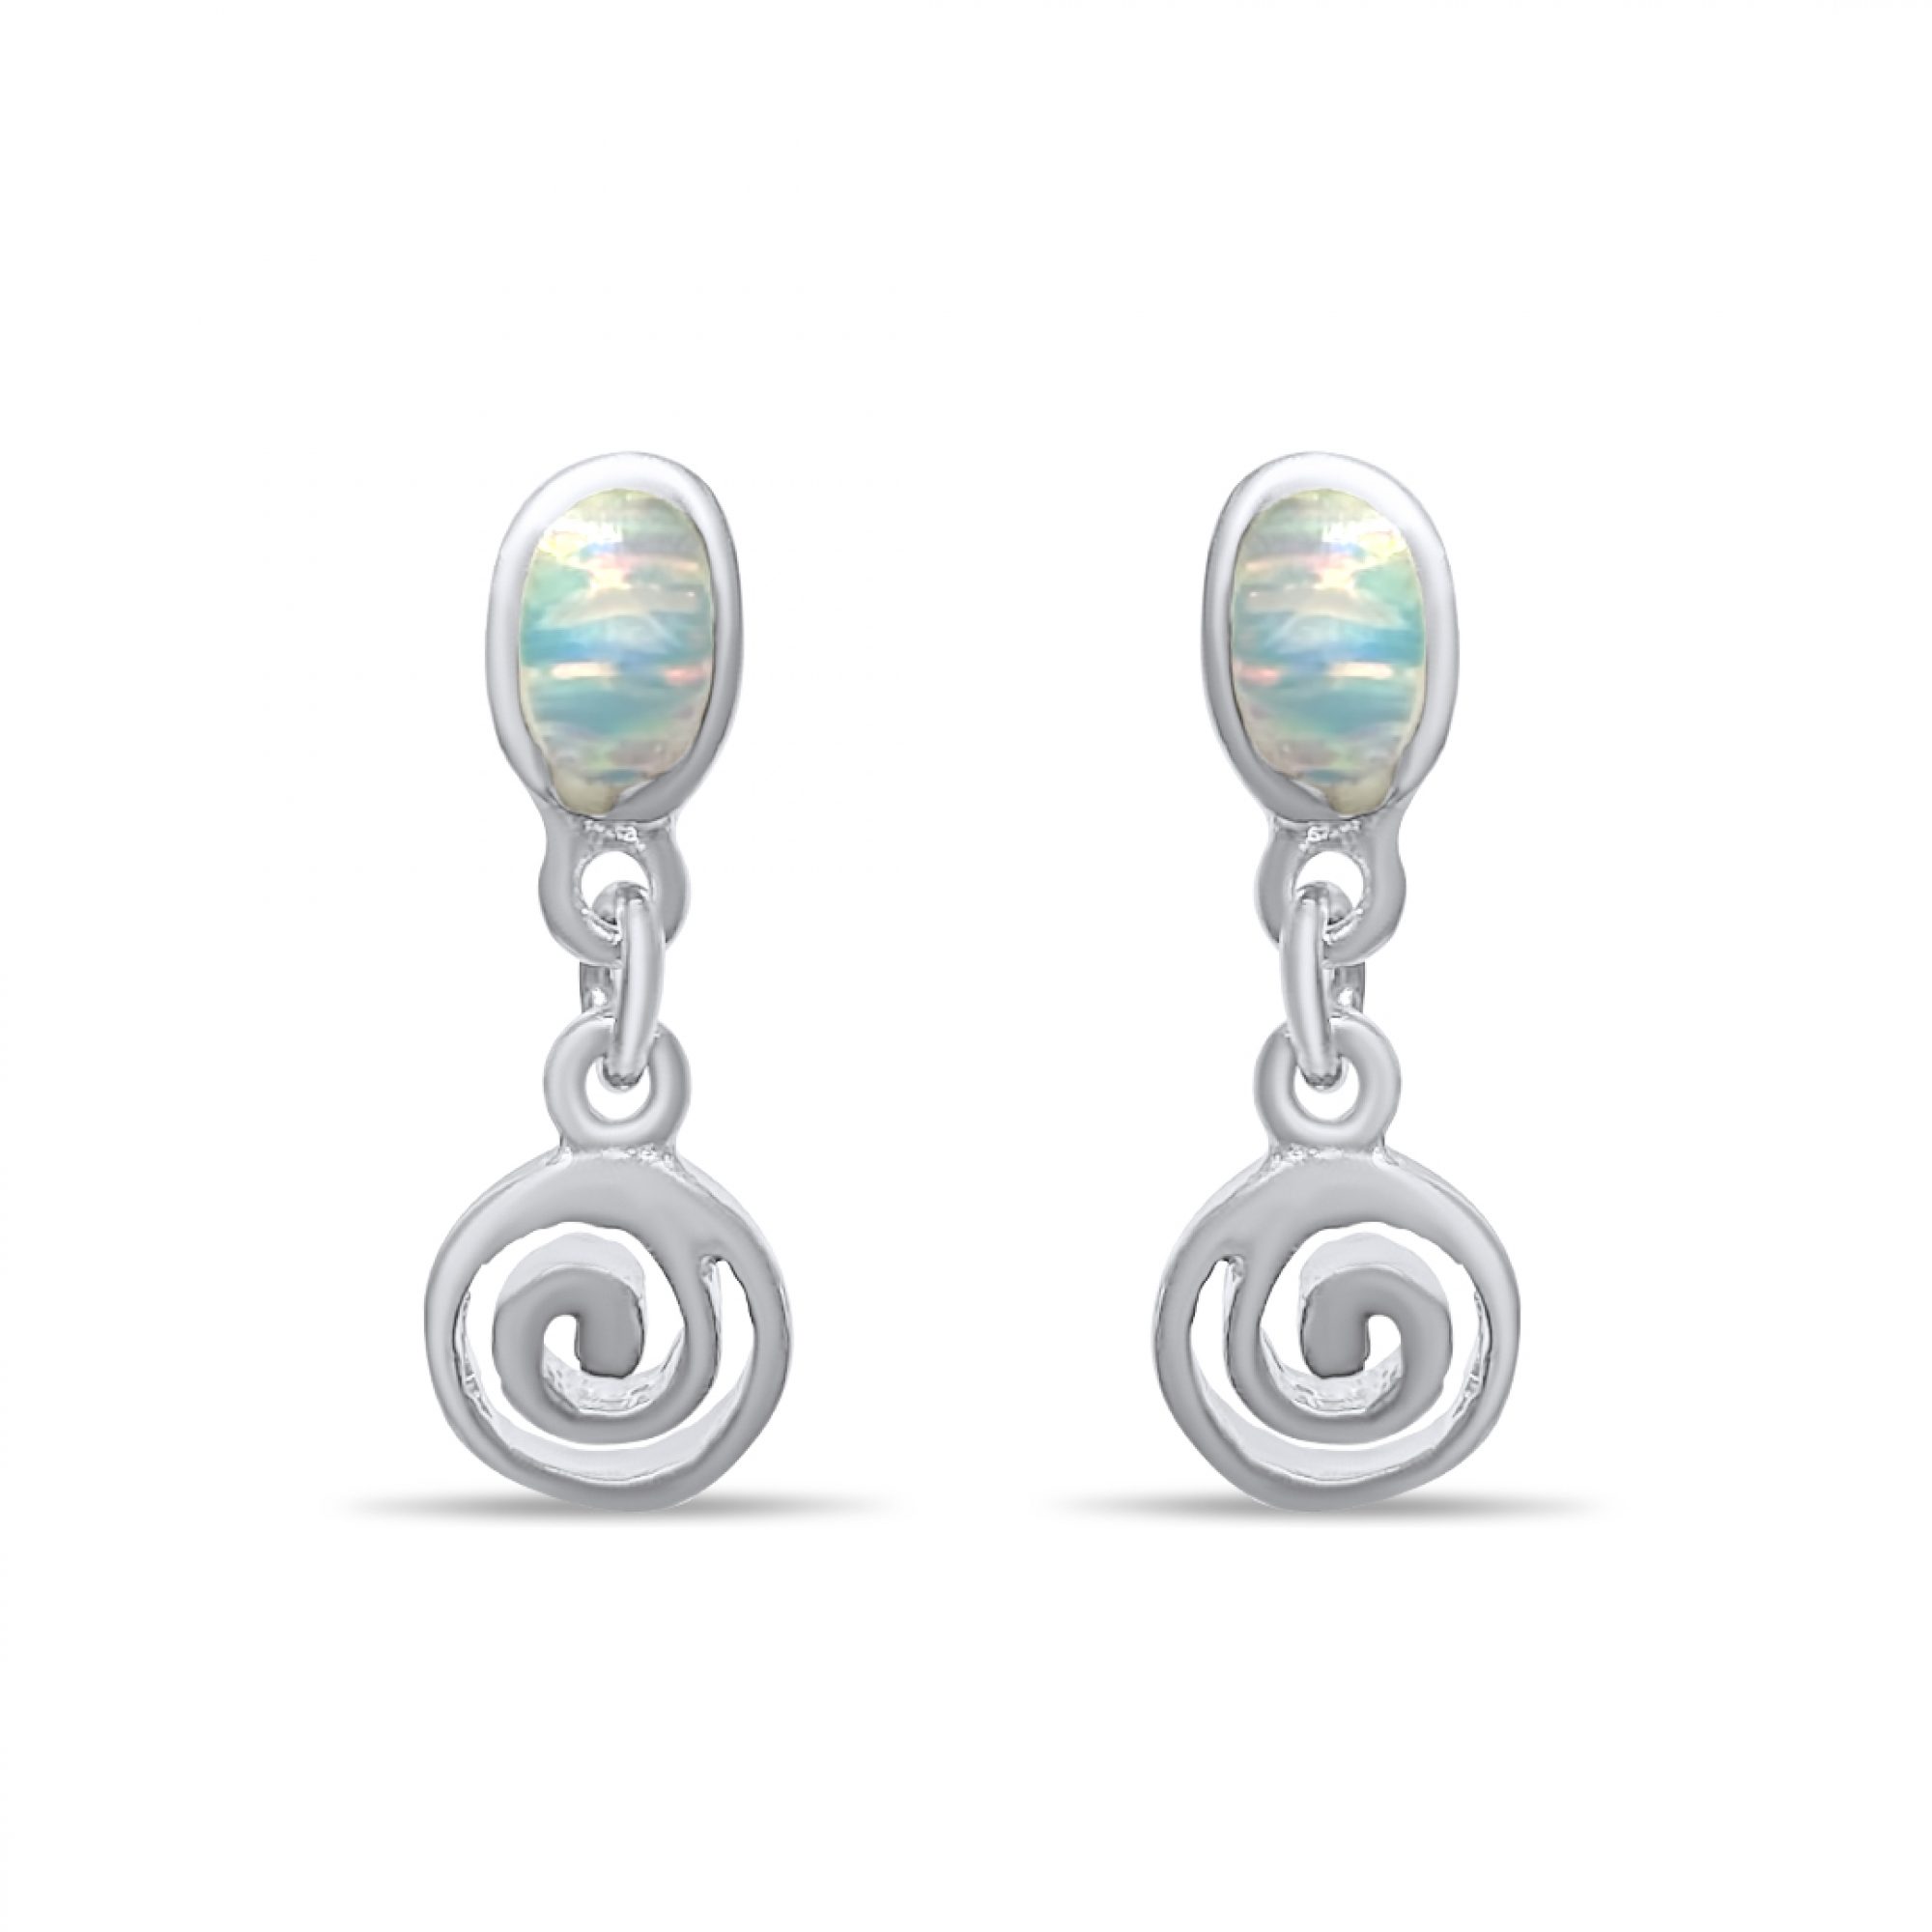 Dangle earrings with white opal